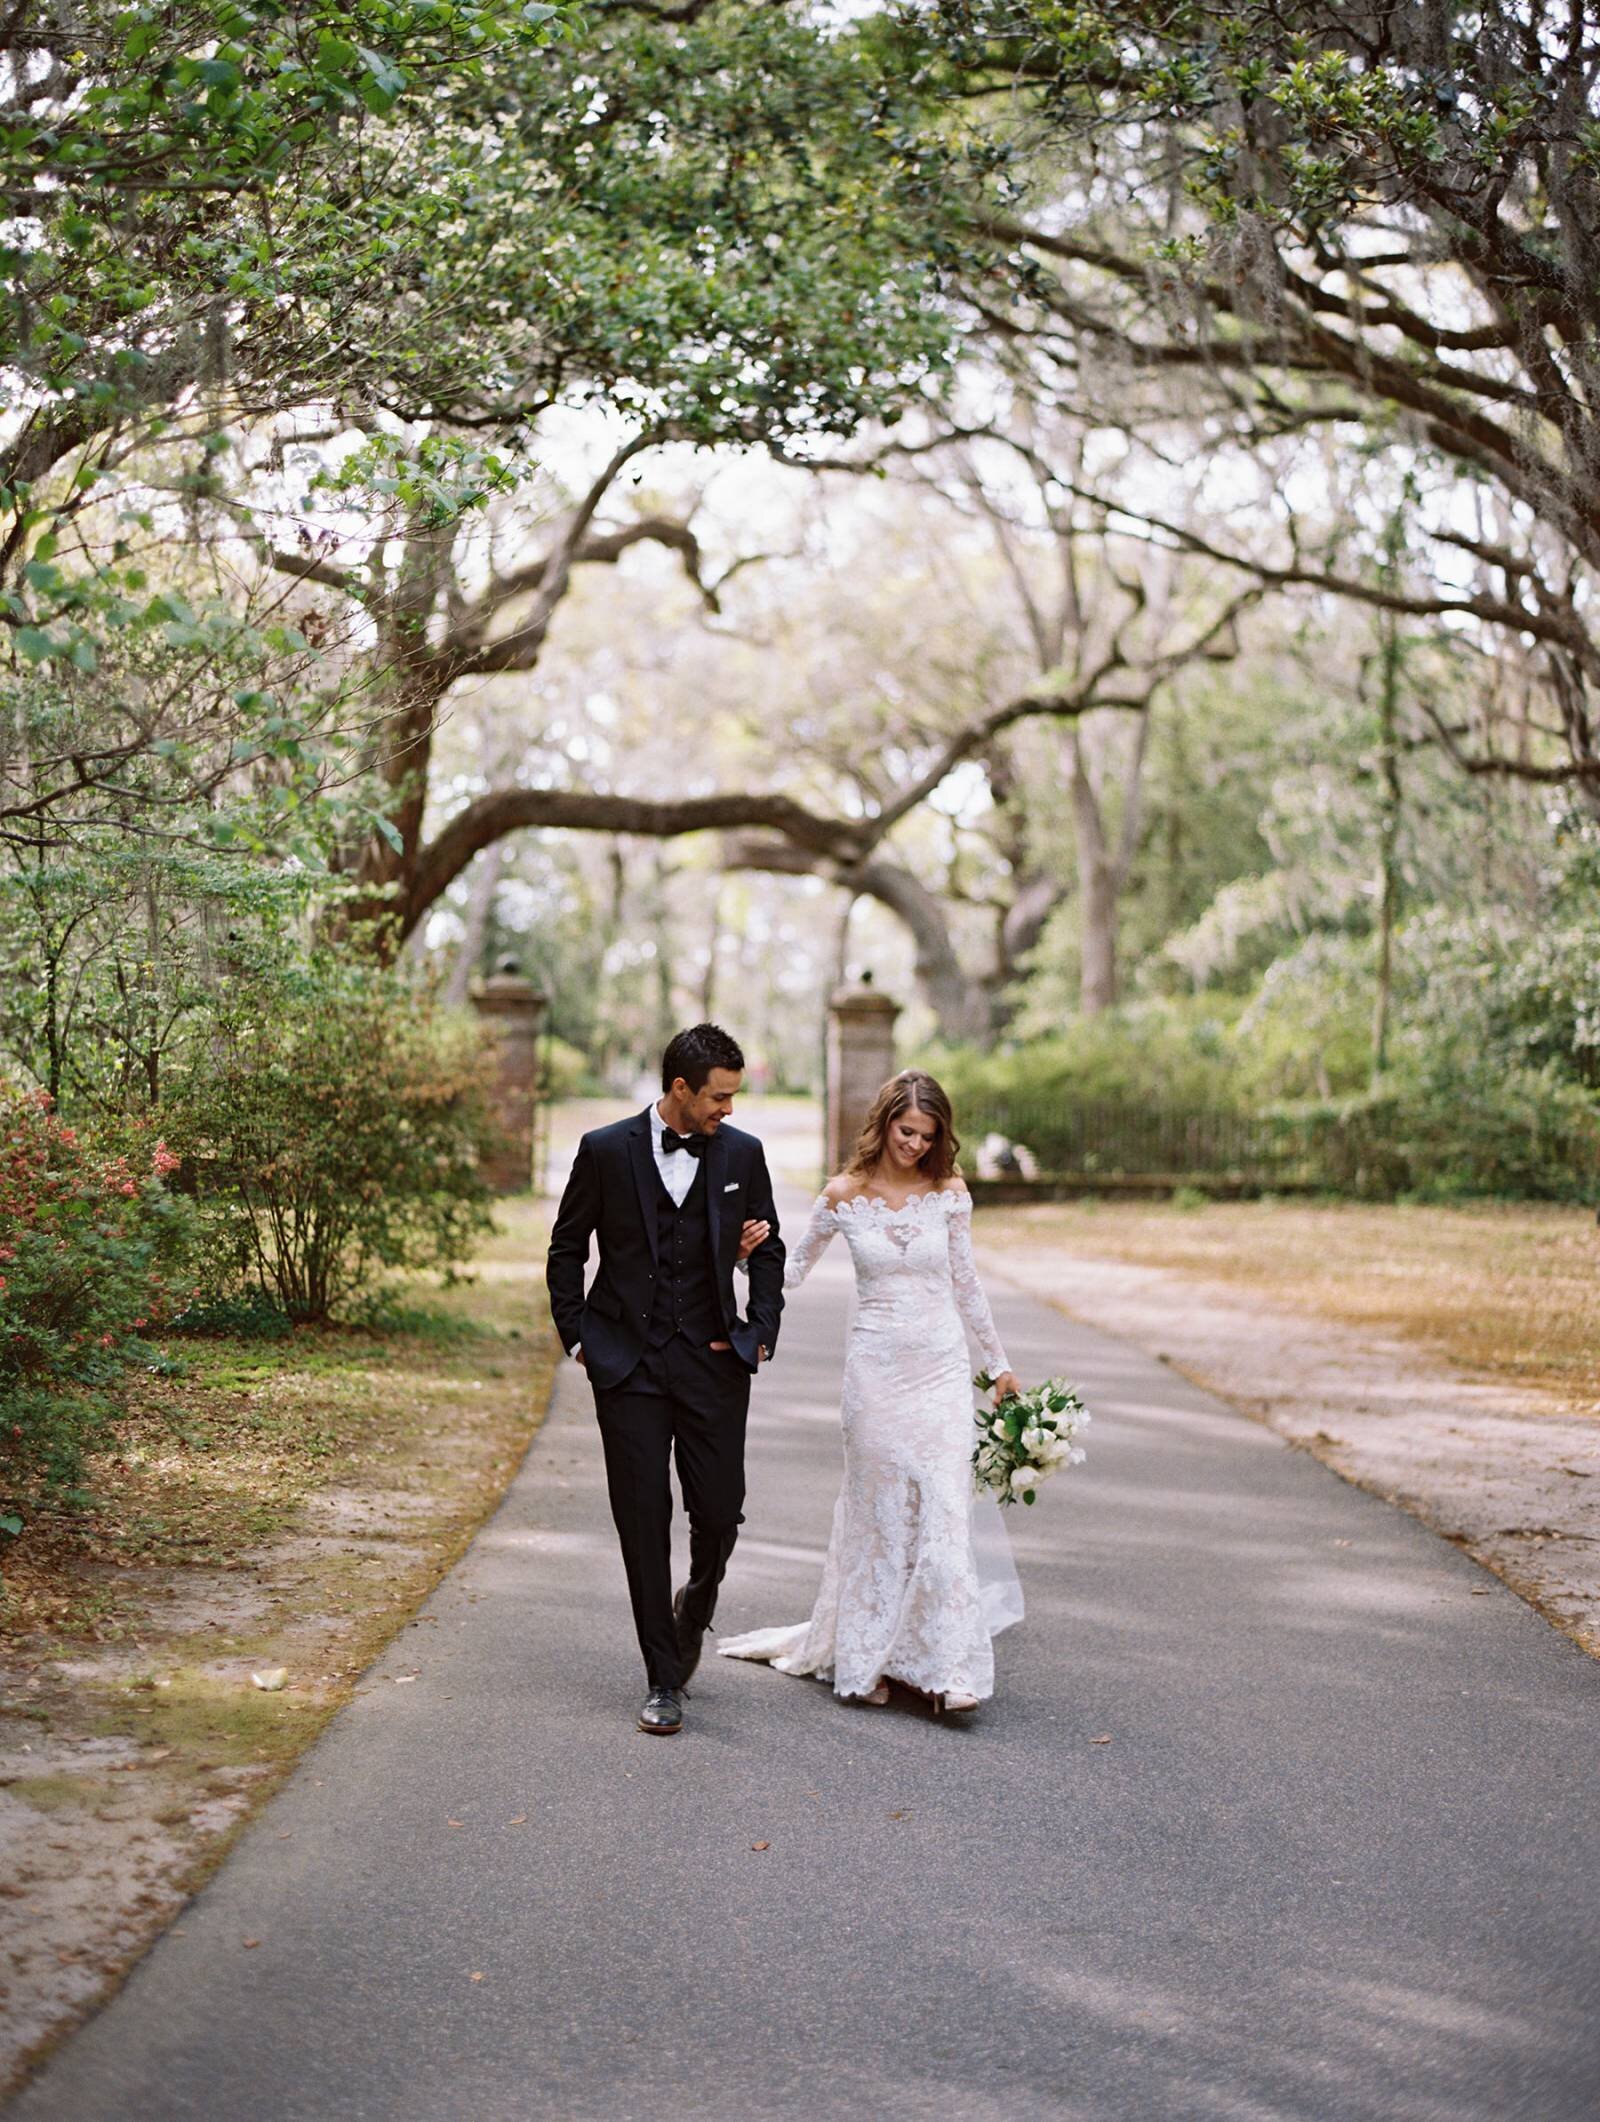 Charleston wedding venue Legare Waring House, photo by Brumley and Wells (@brumleyandwells)